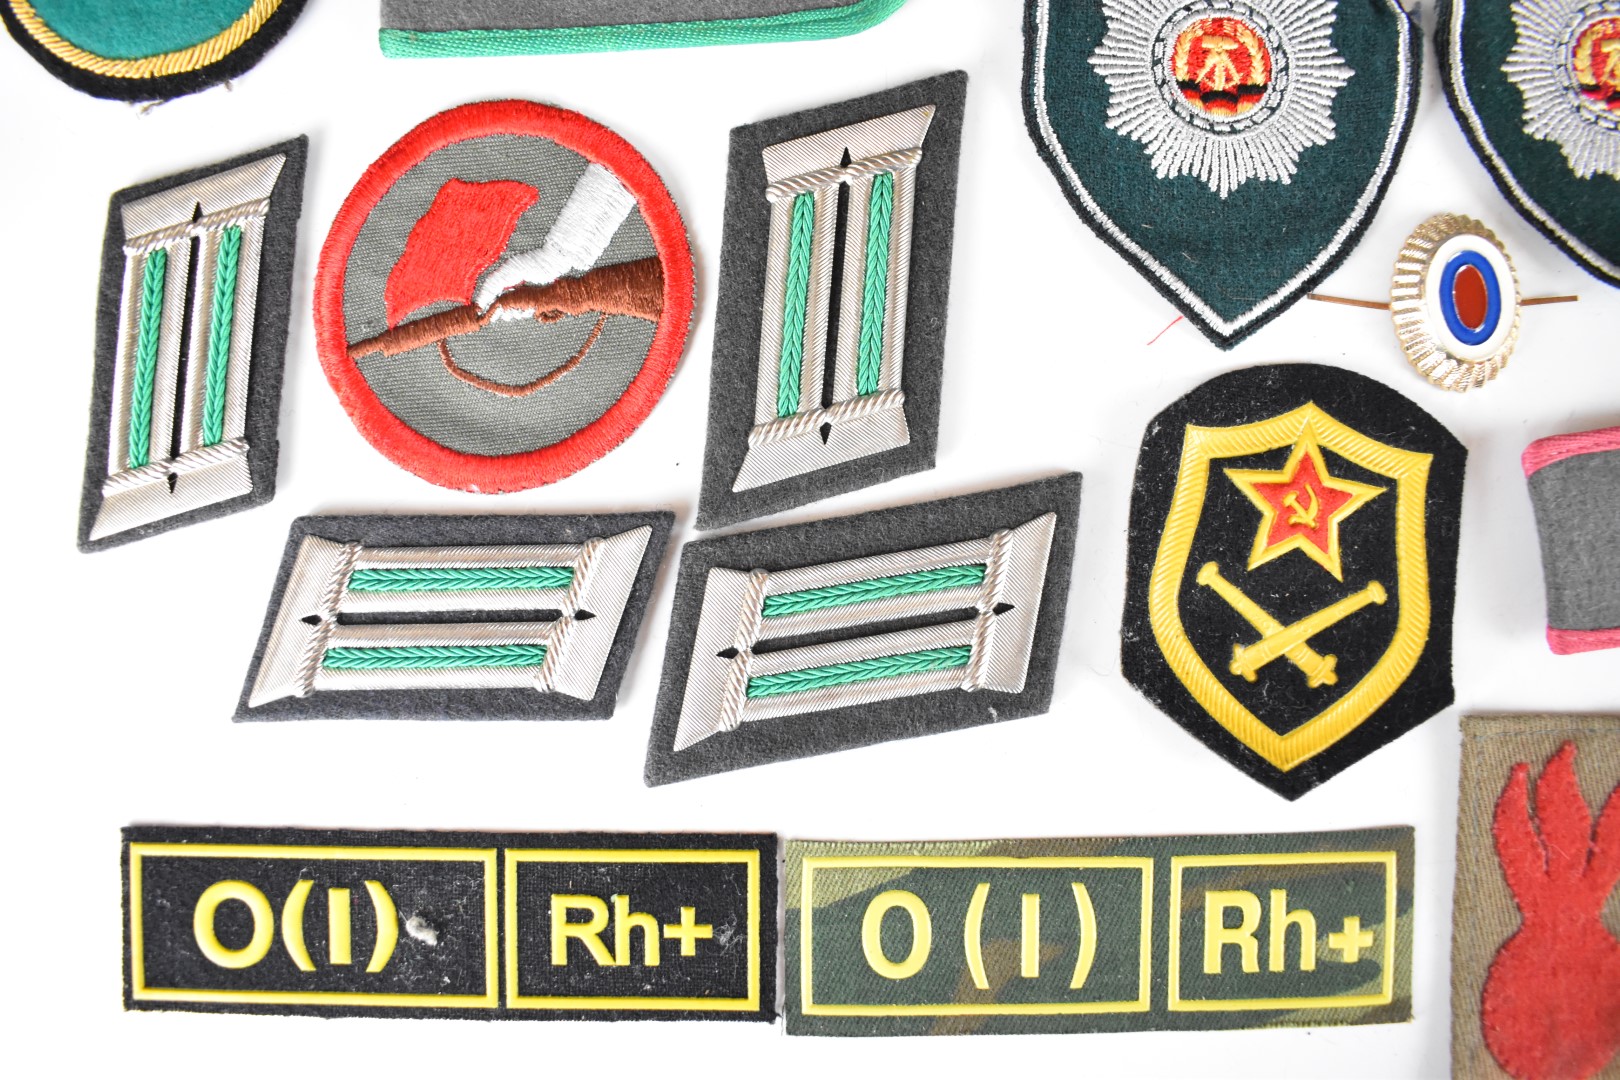 Russian / East German cloth badges, rank insignia etc - Image 6 of 6